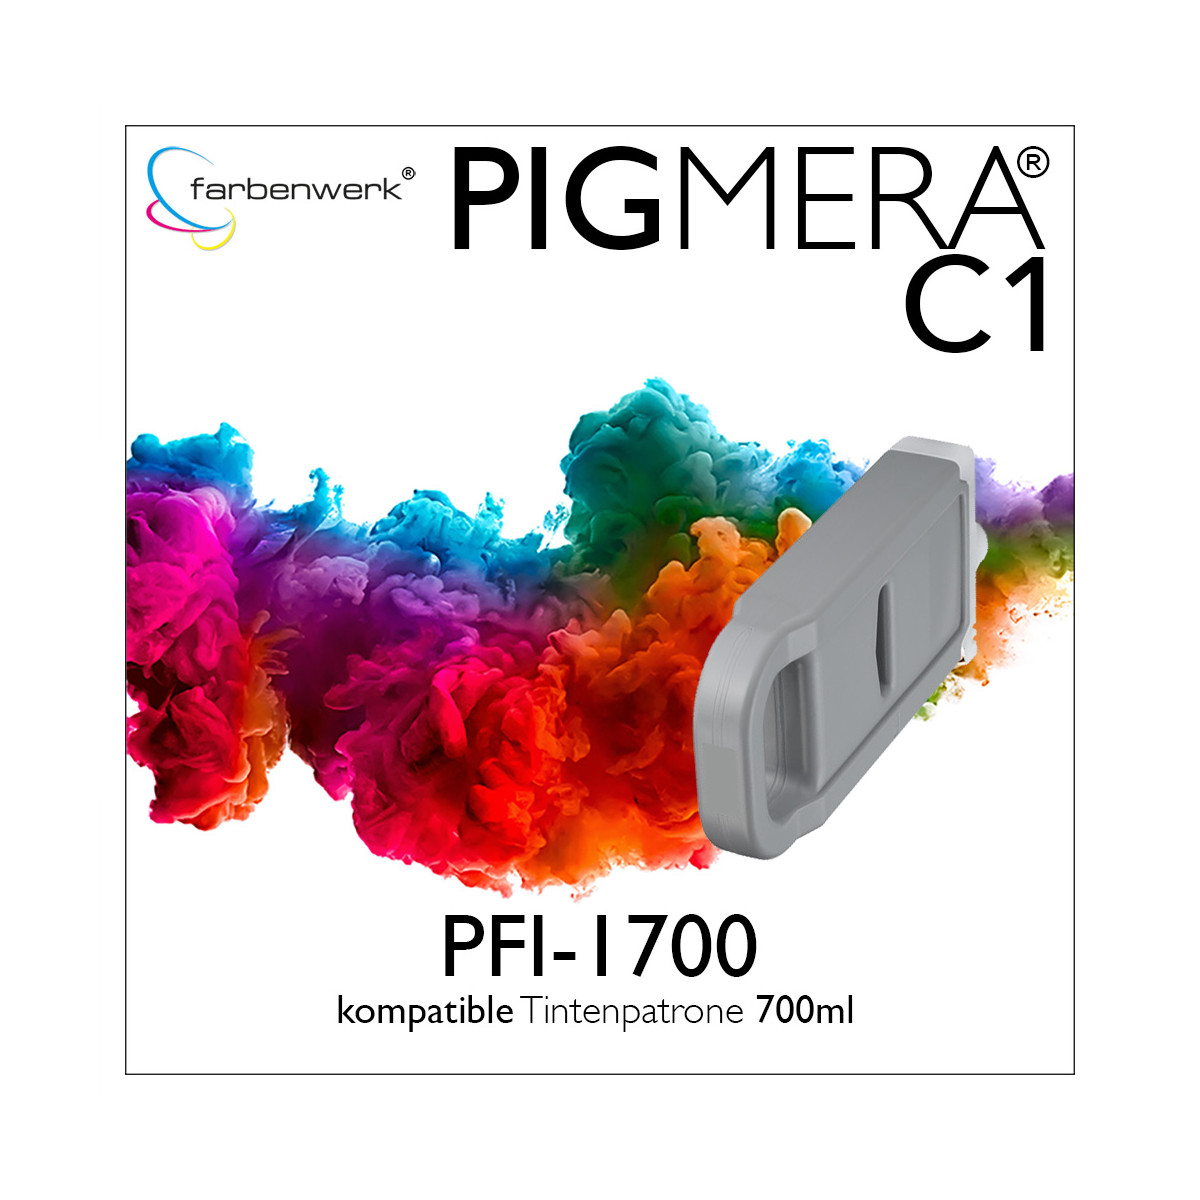 Recycled Ink Cartridge 700ml Pigmera C1 for PFI-1700